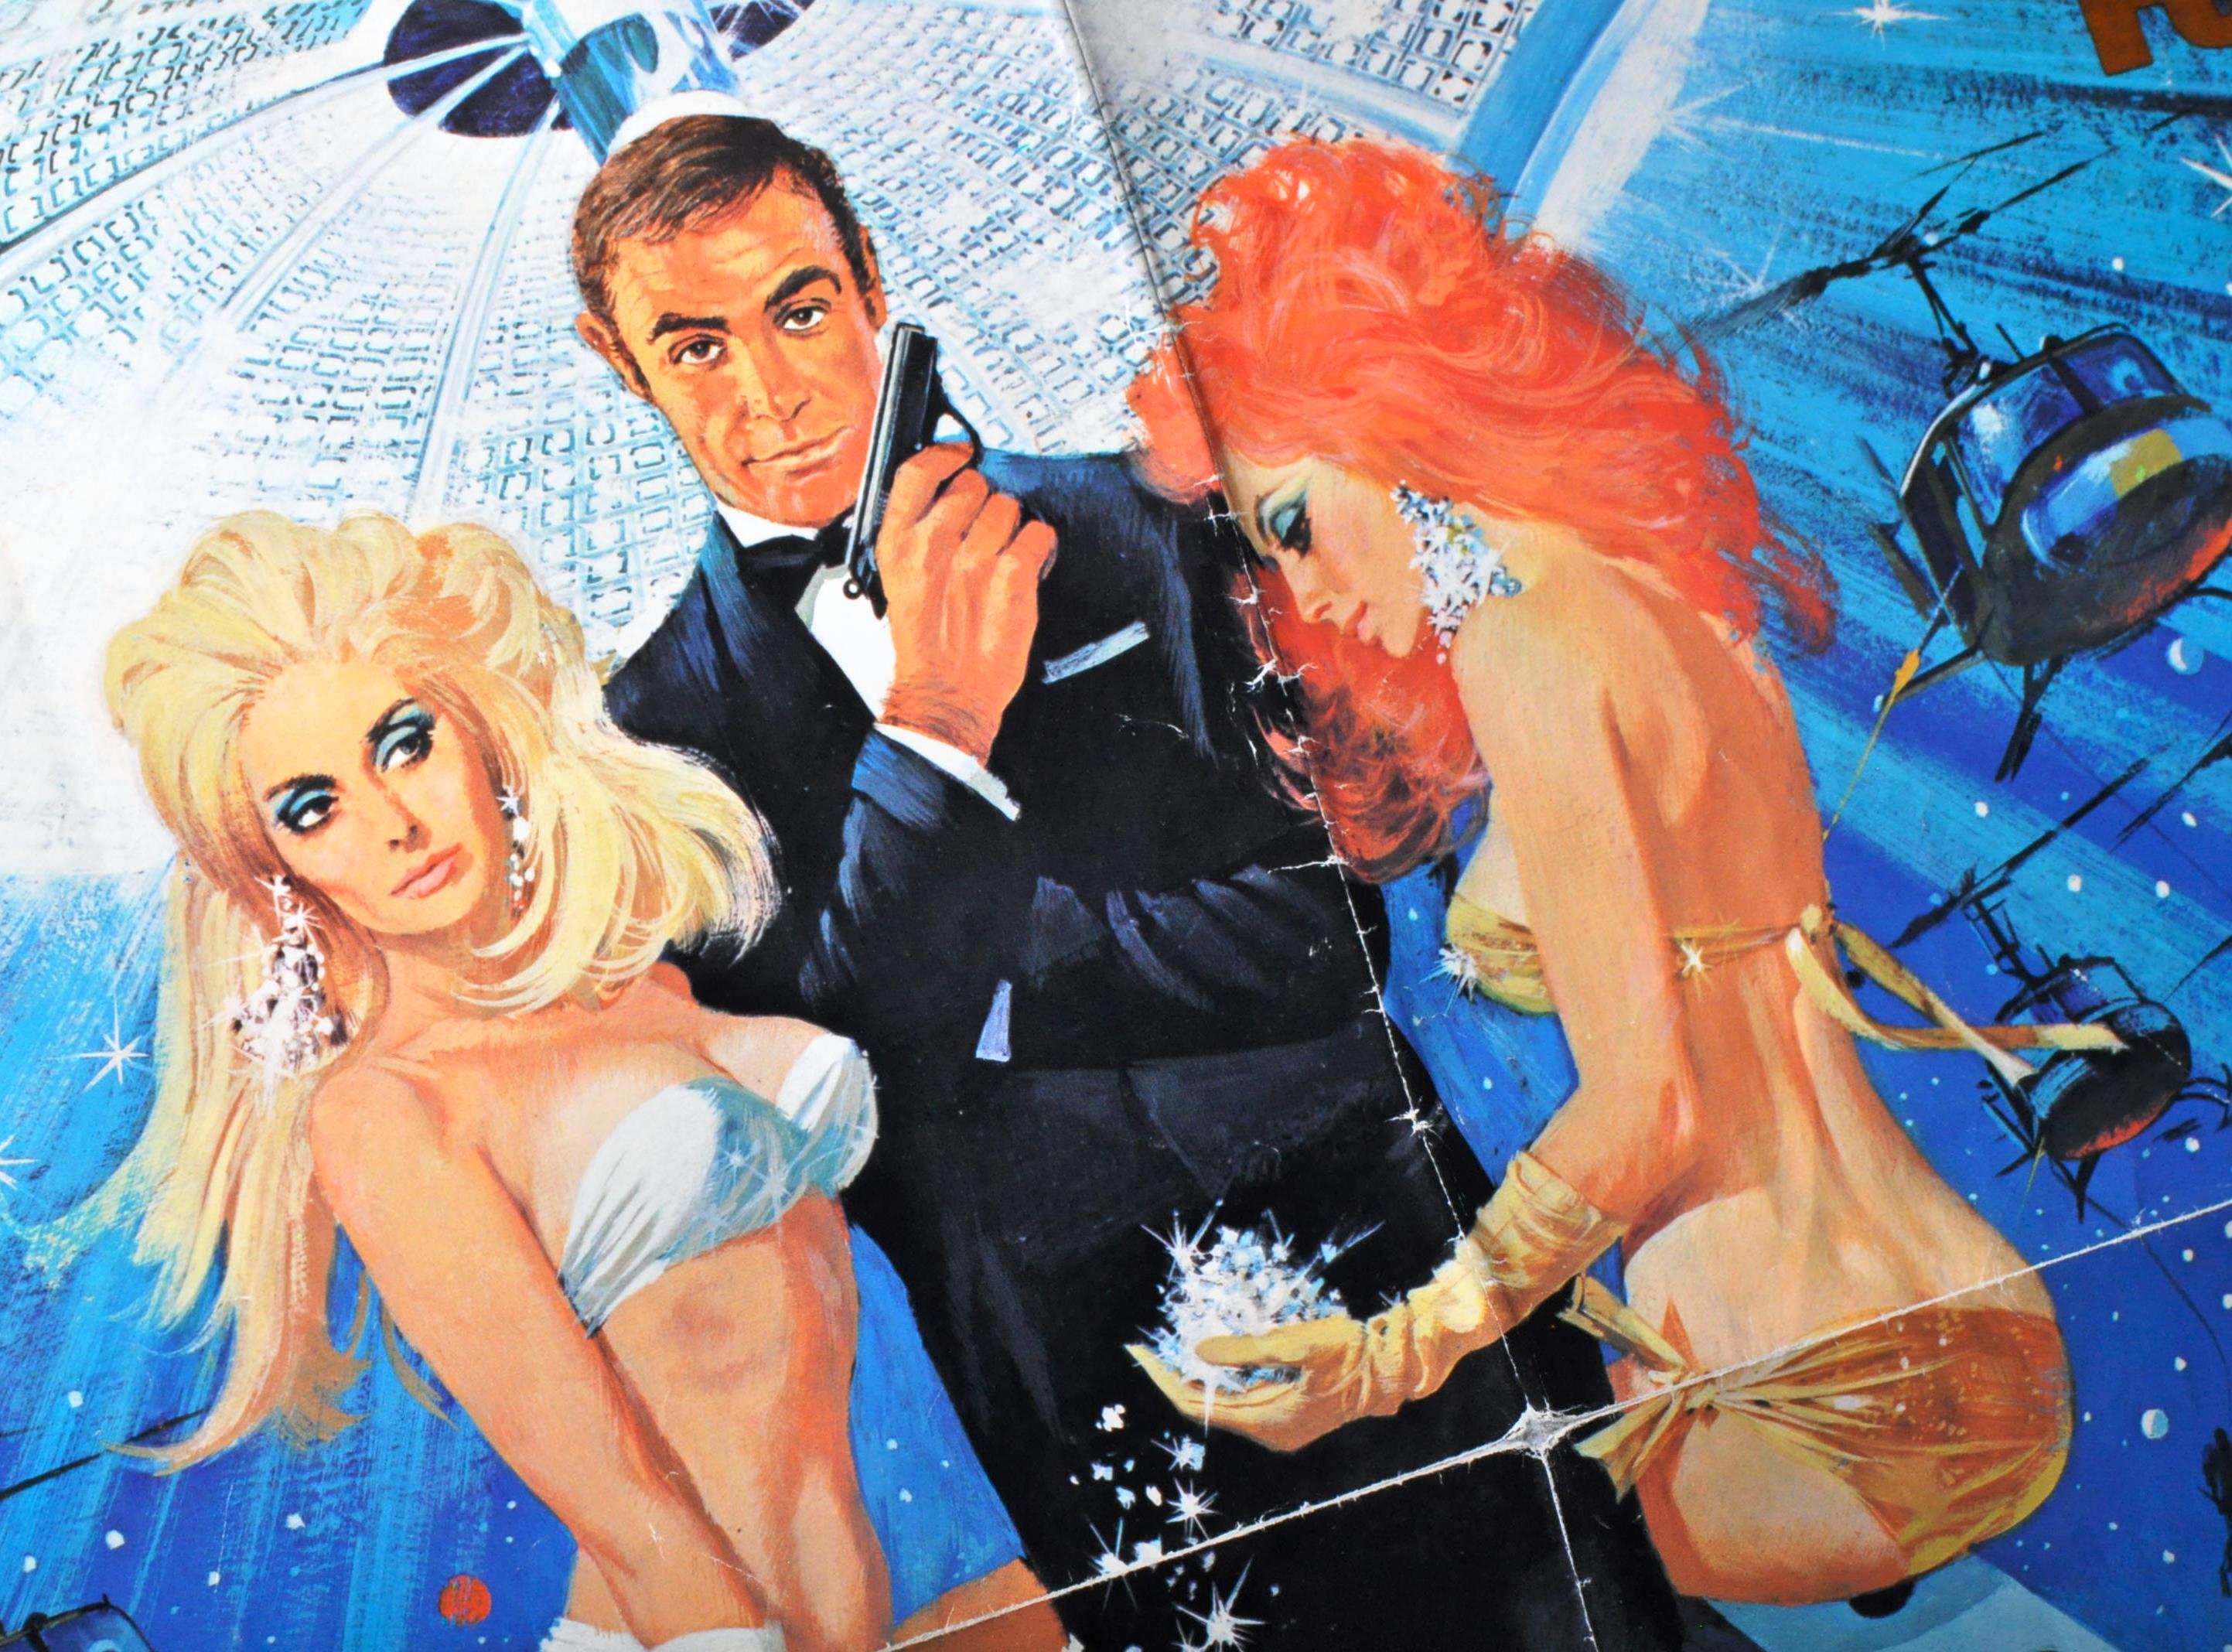 JAMES BOND 007 - DIAMONDS ARE FOREVER - ORIGINAL US ONE SHEET POSTER - Image 2 of 8